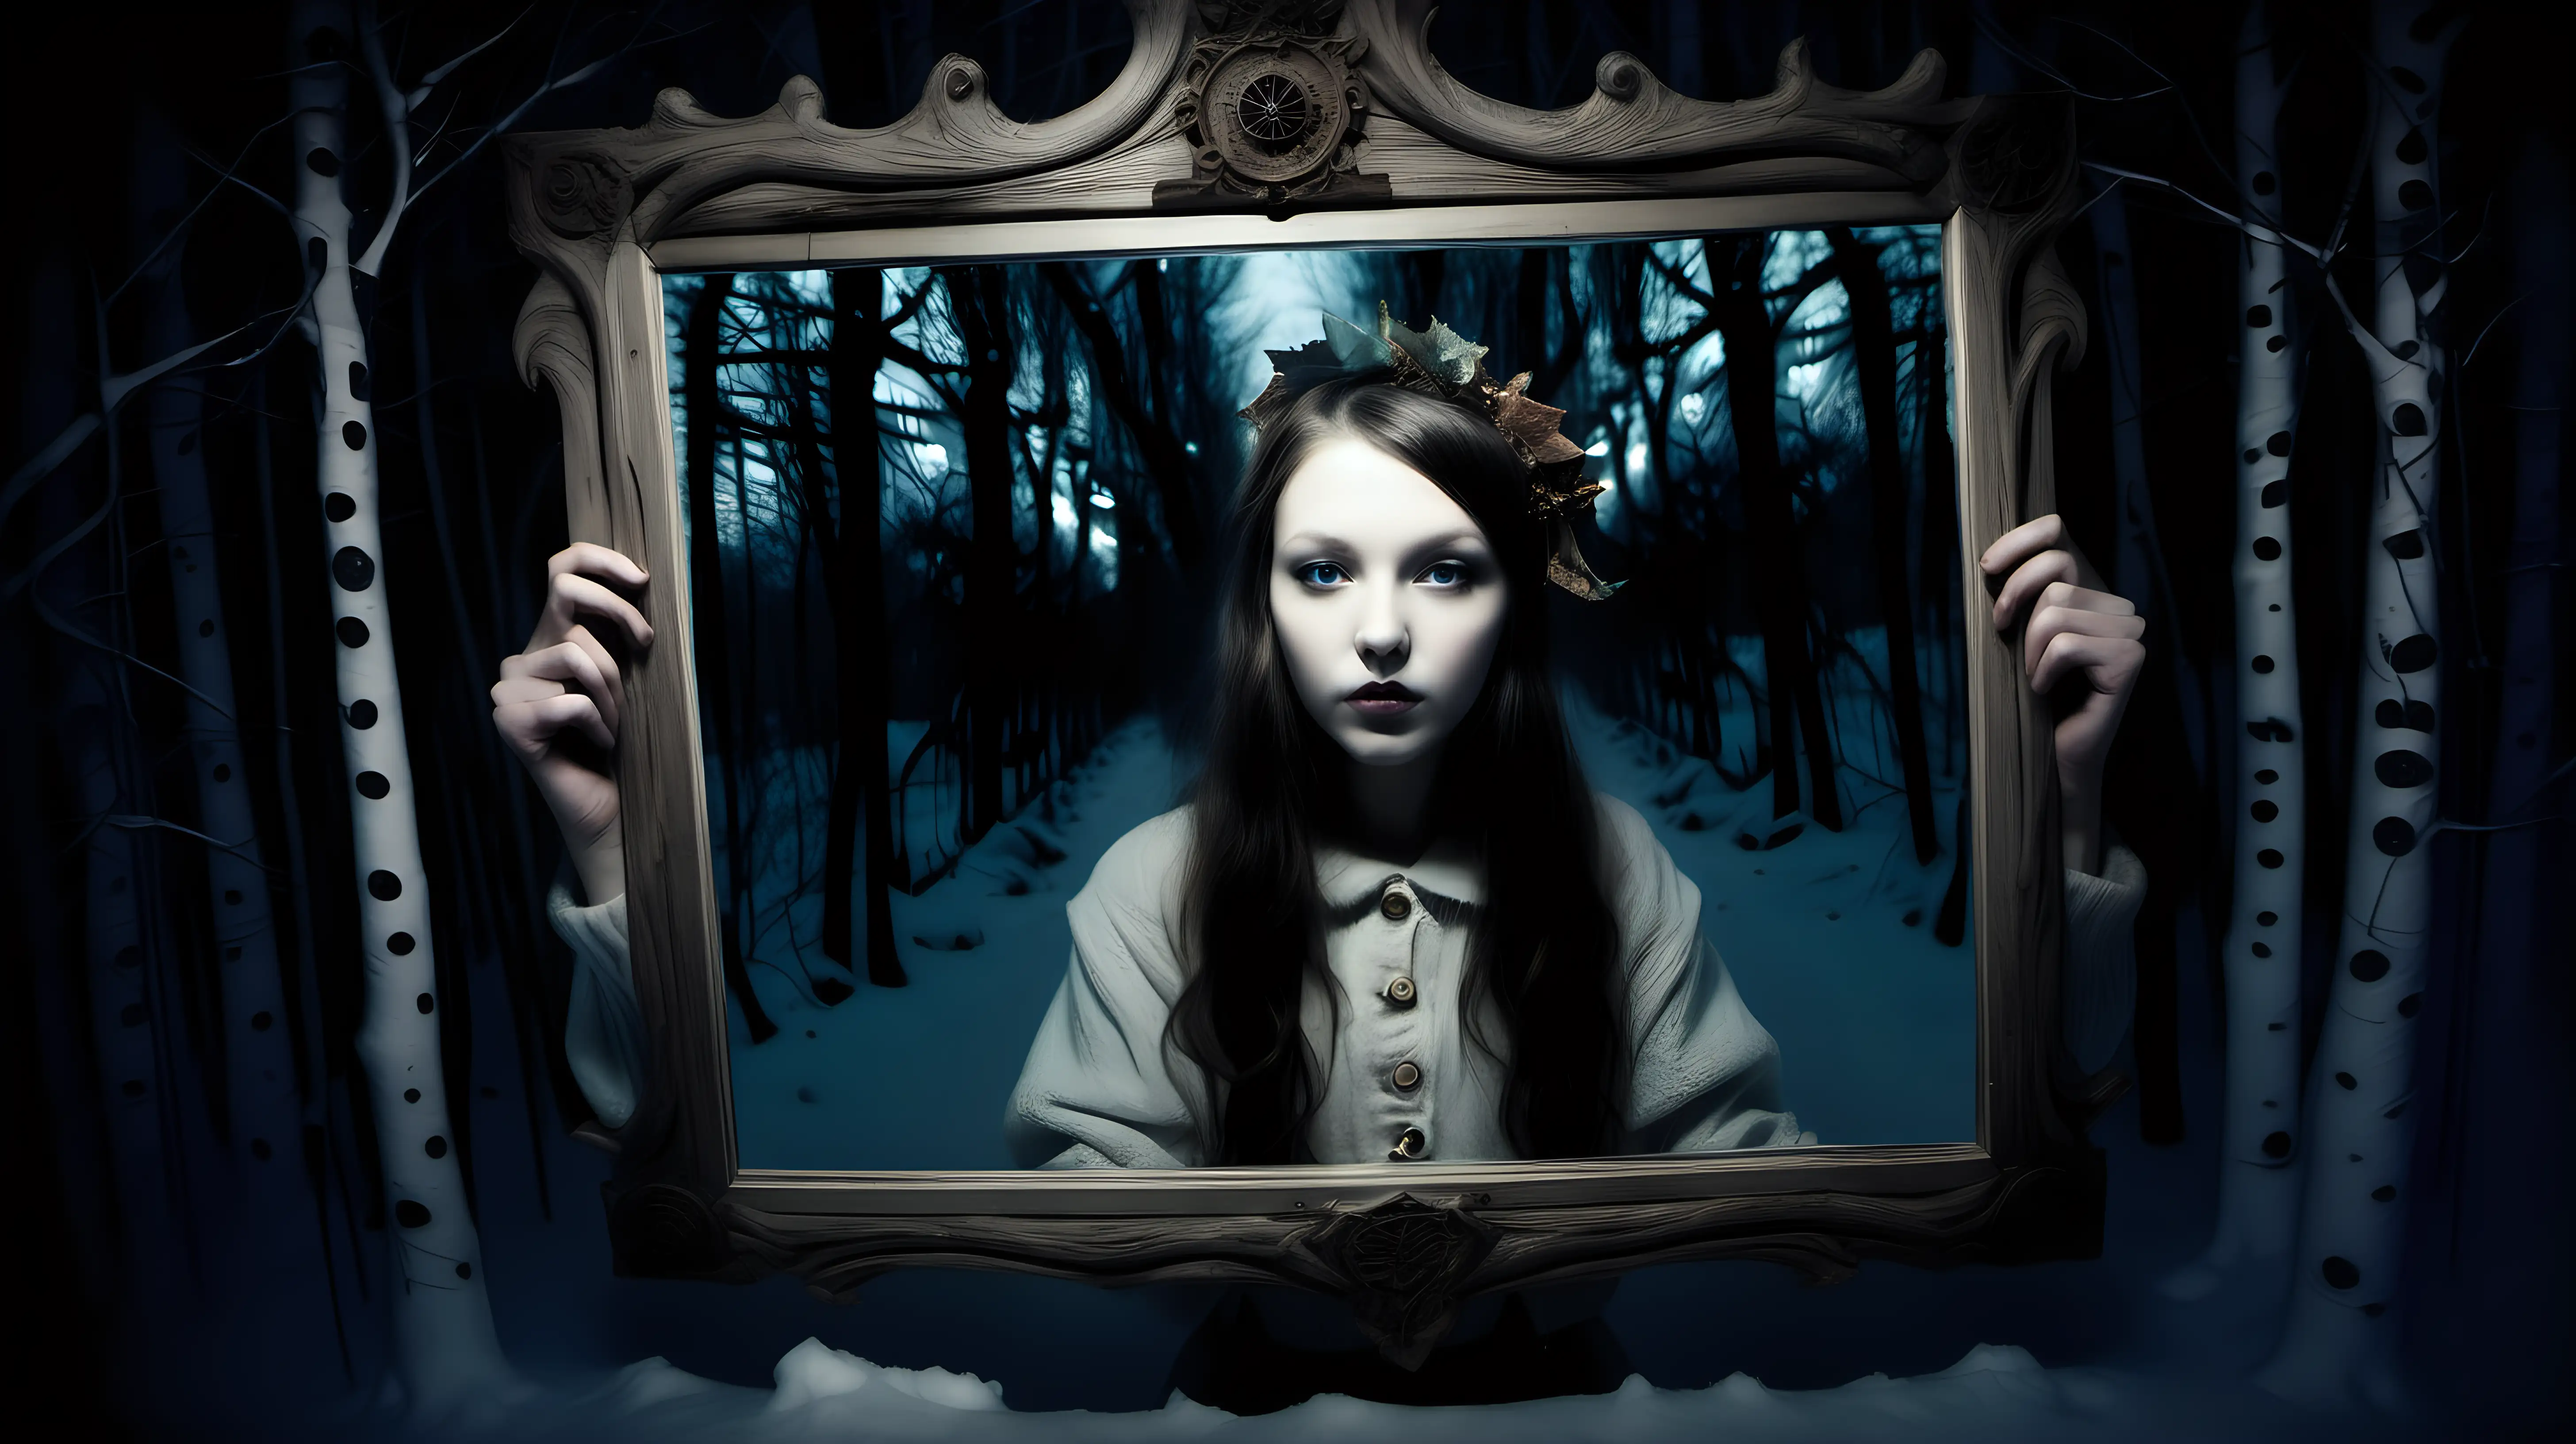 lost winter wood darkness magic lantern girl behind mirrors